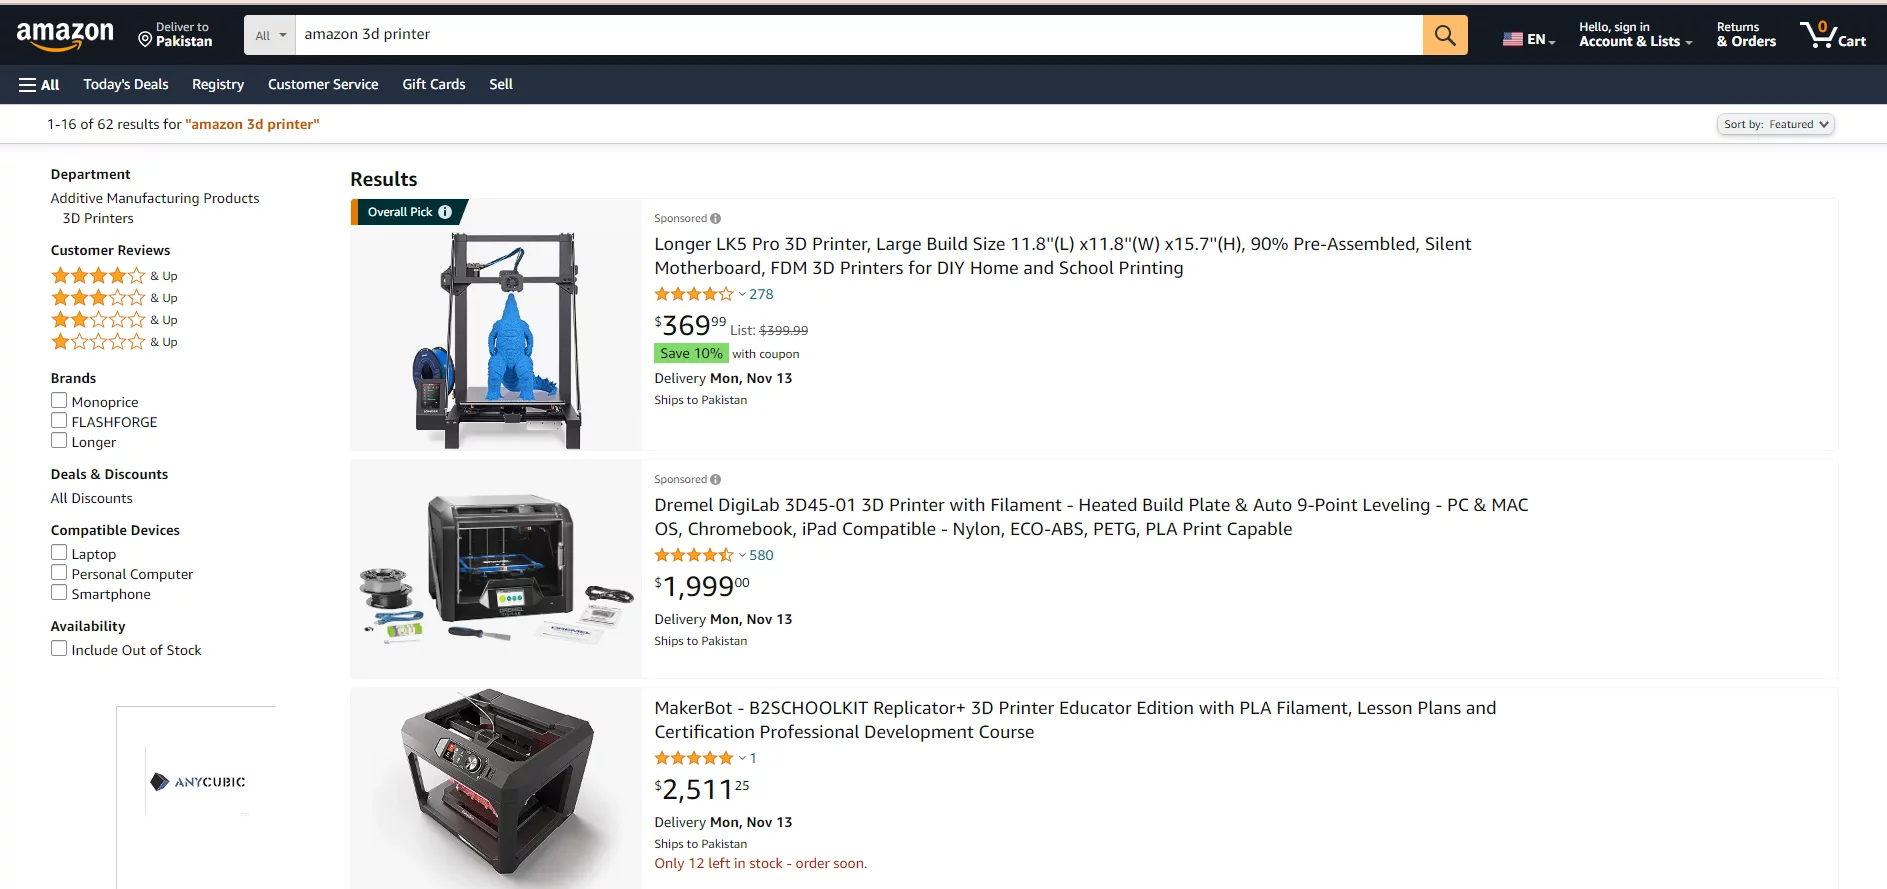 Amazon - "The E-Commerce Giant"